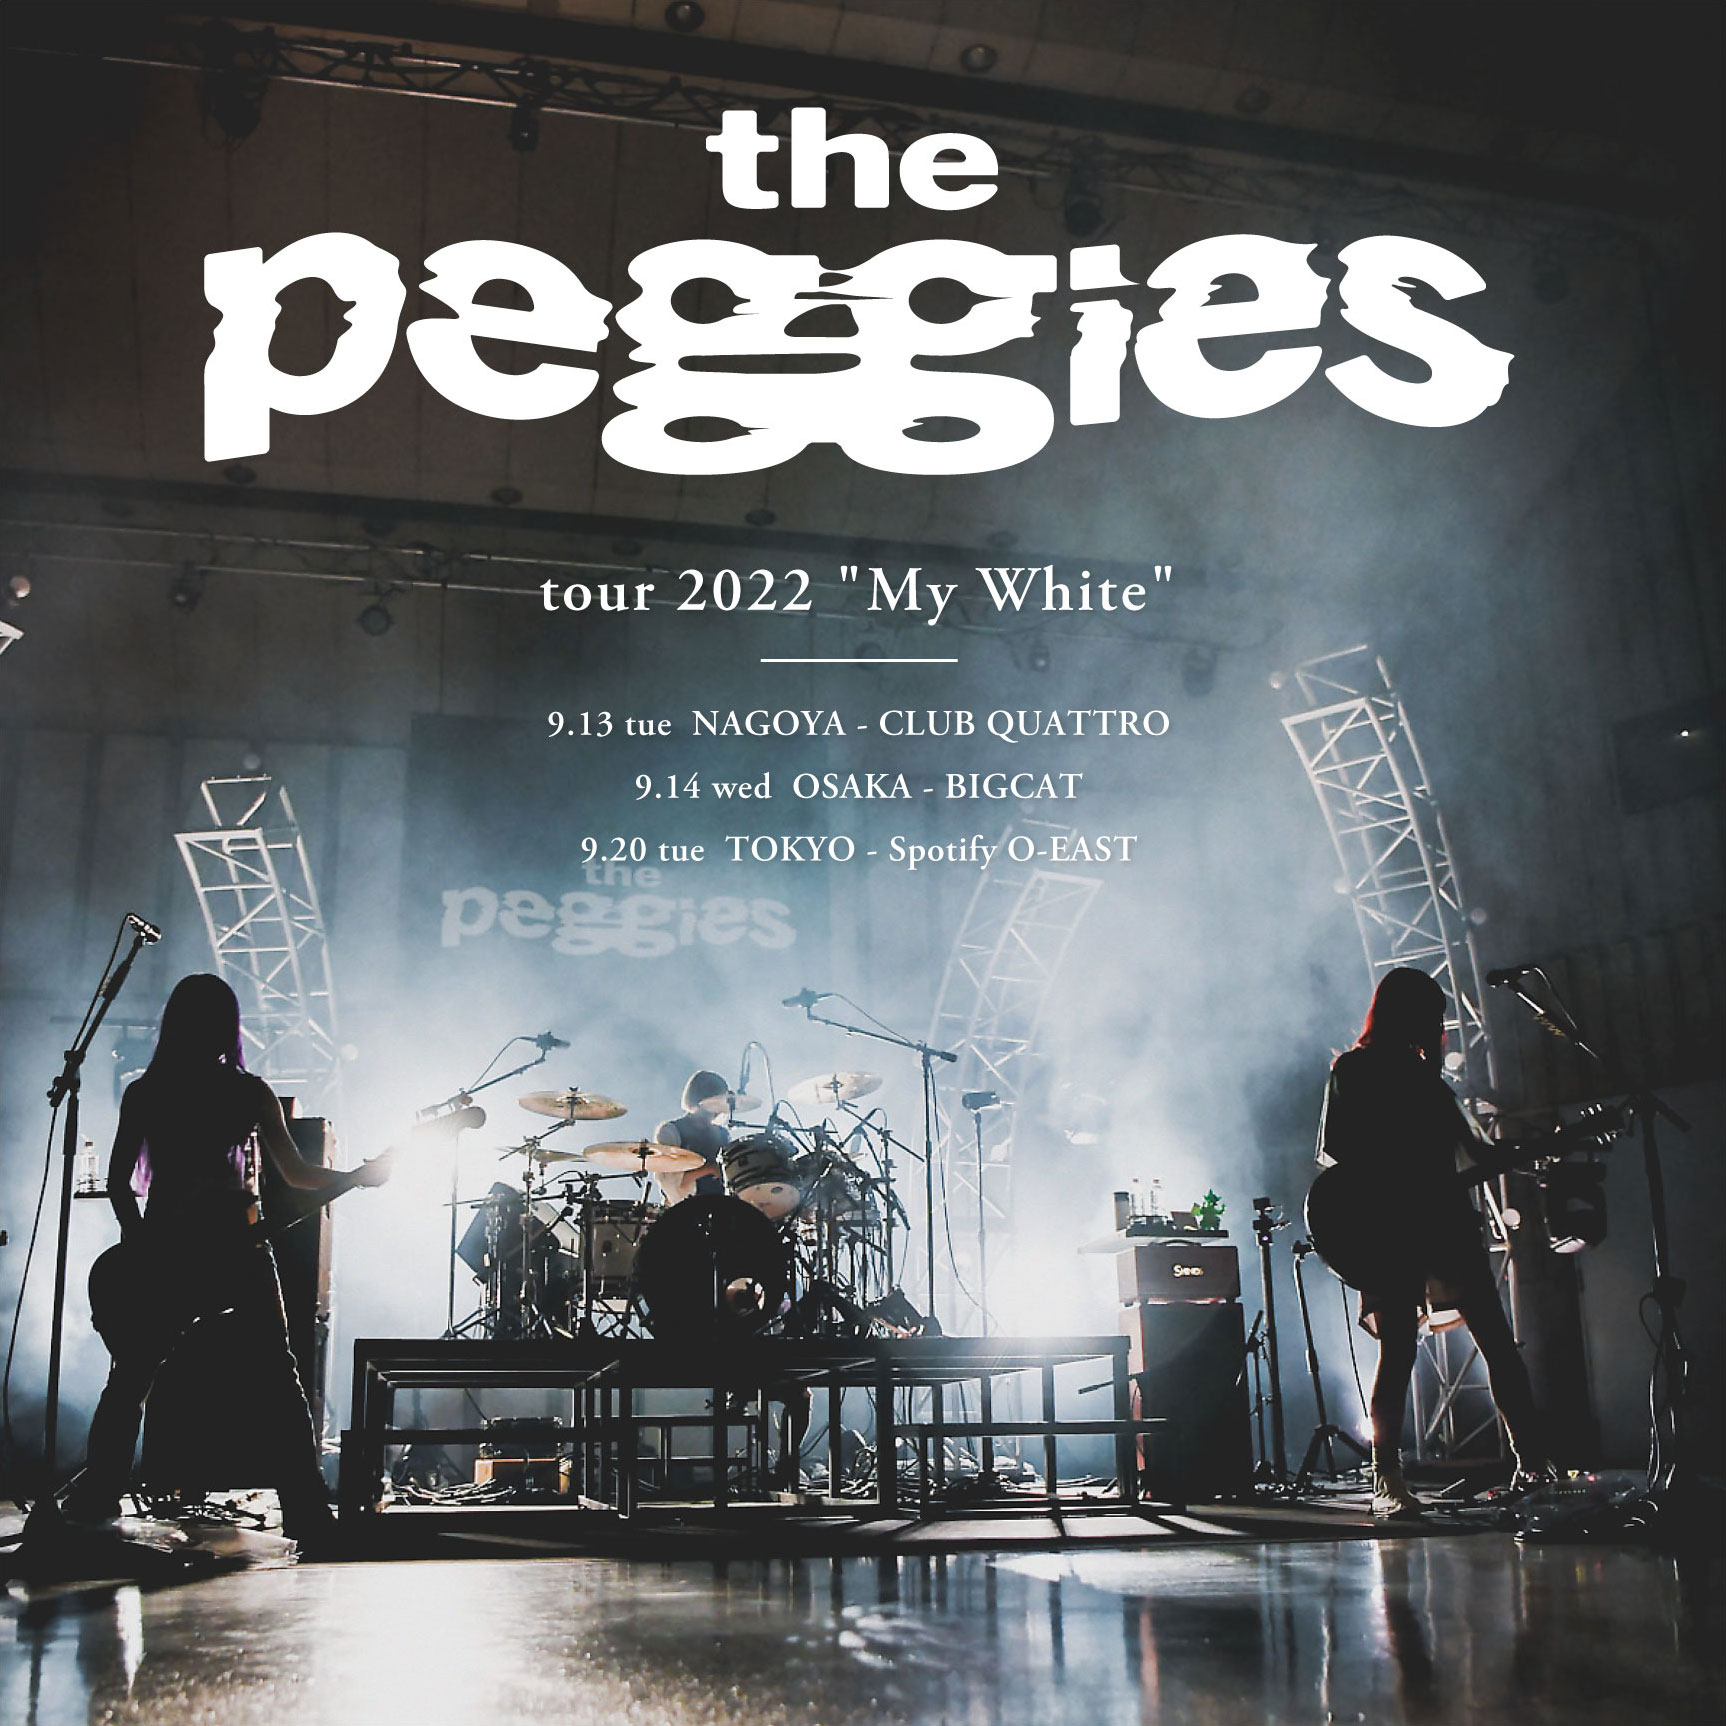 the peggies tour 2022 “My White” / the peggies “MMY” 特設サイト